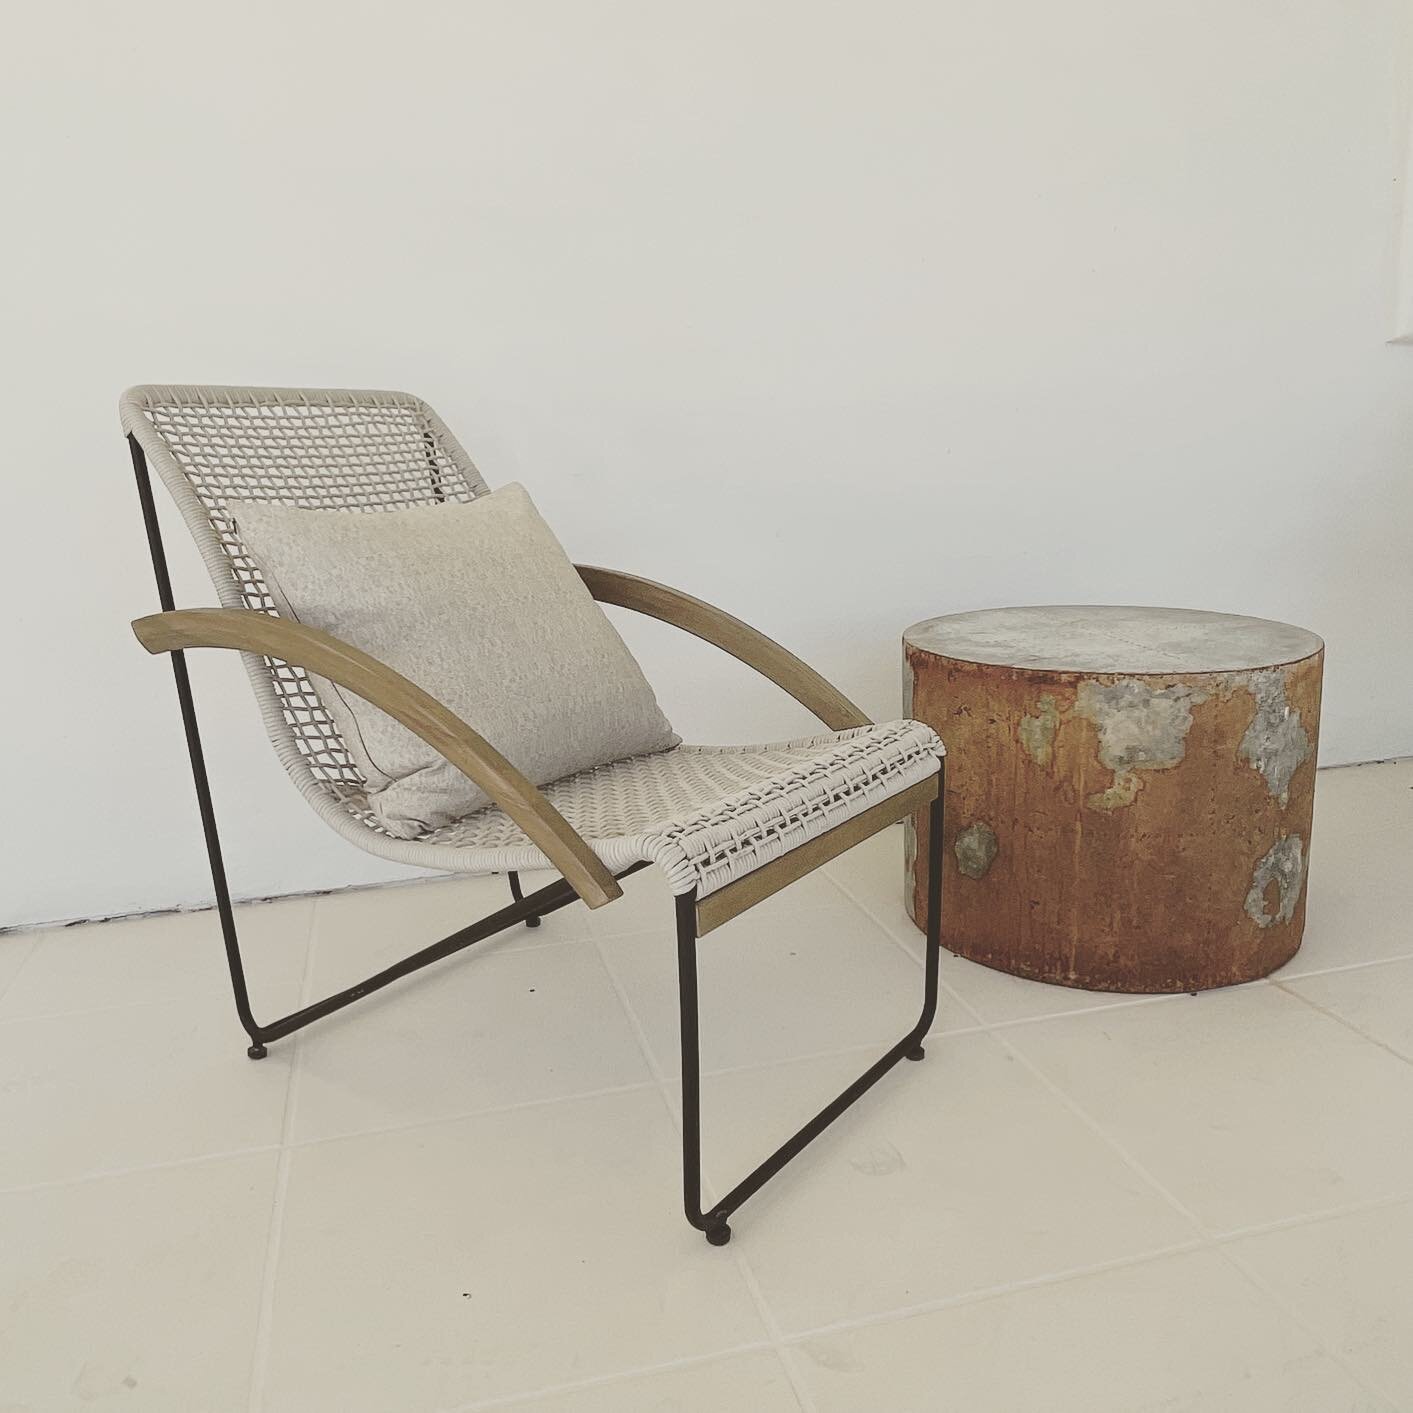 When outdoor furniture doubles as art!

Great price for this chair! DM me if you need one or two;) 

#interiordesign #interiordesigner #outdoorliving #outdoordesigner #sblife #santabarbaraarchitecture #santabarbaradesign #boho #bohodesign #moderndesi